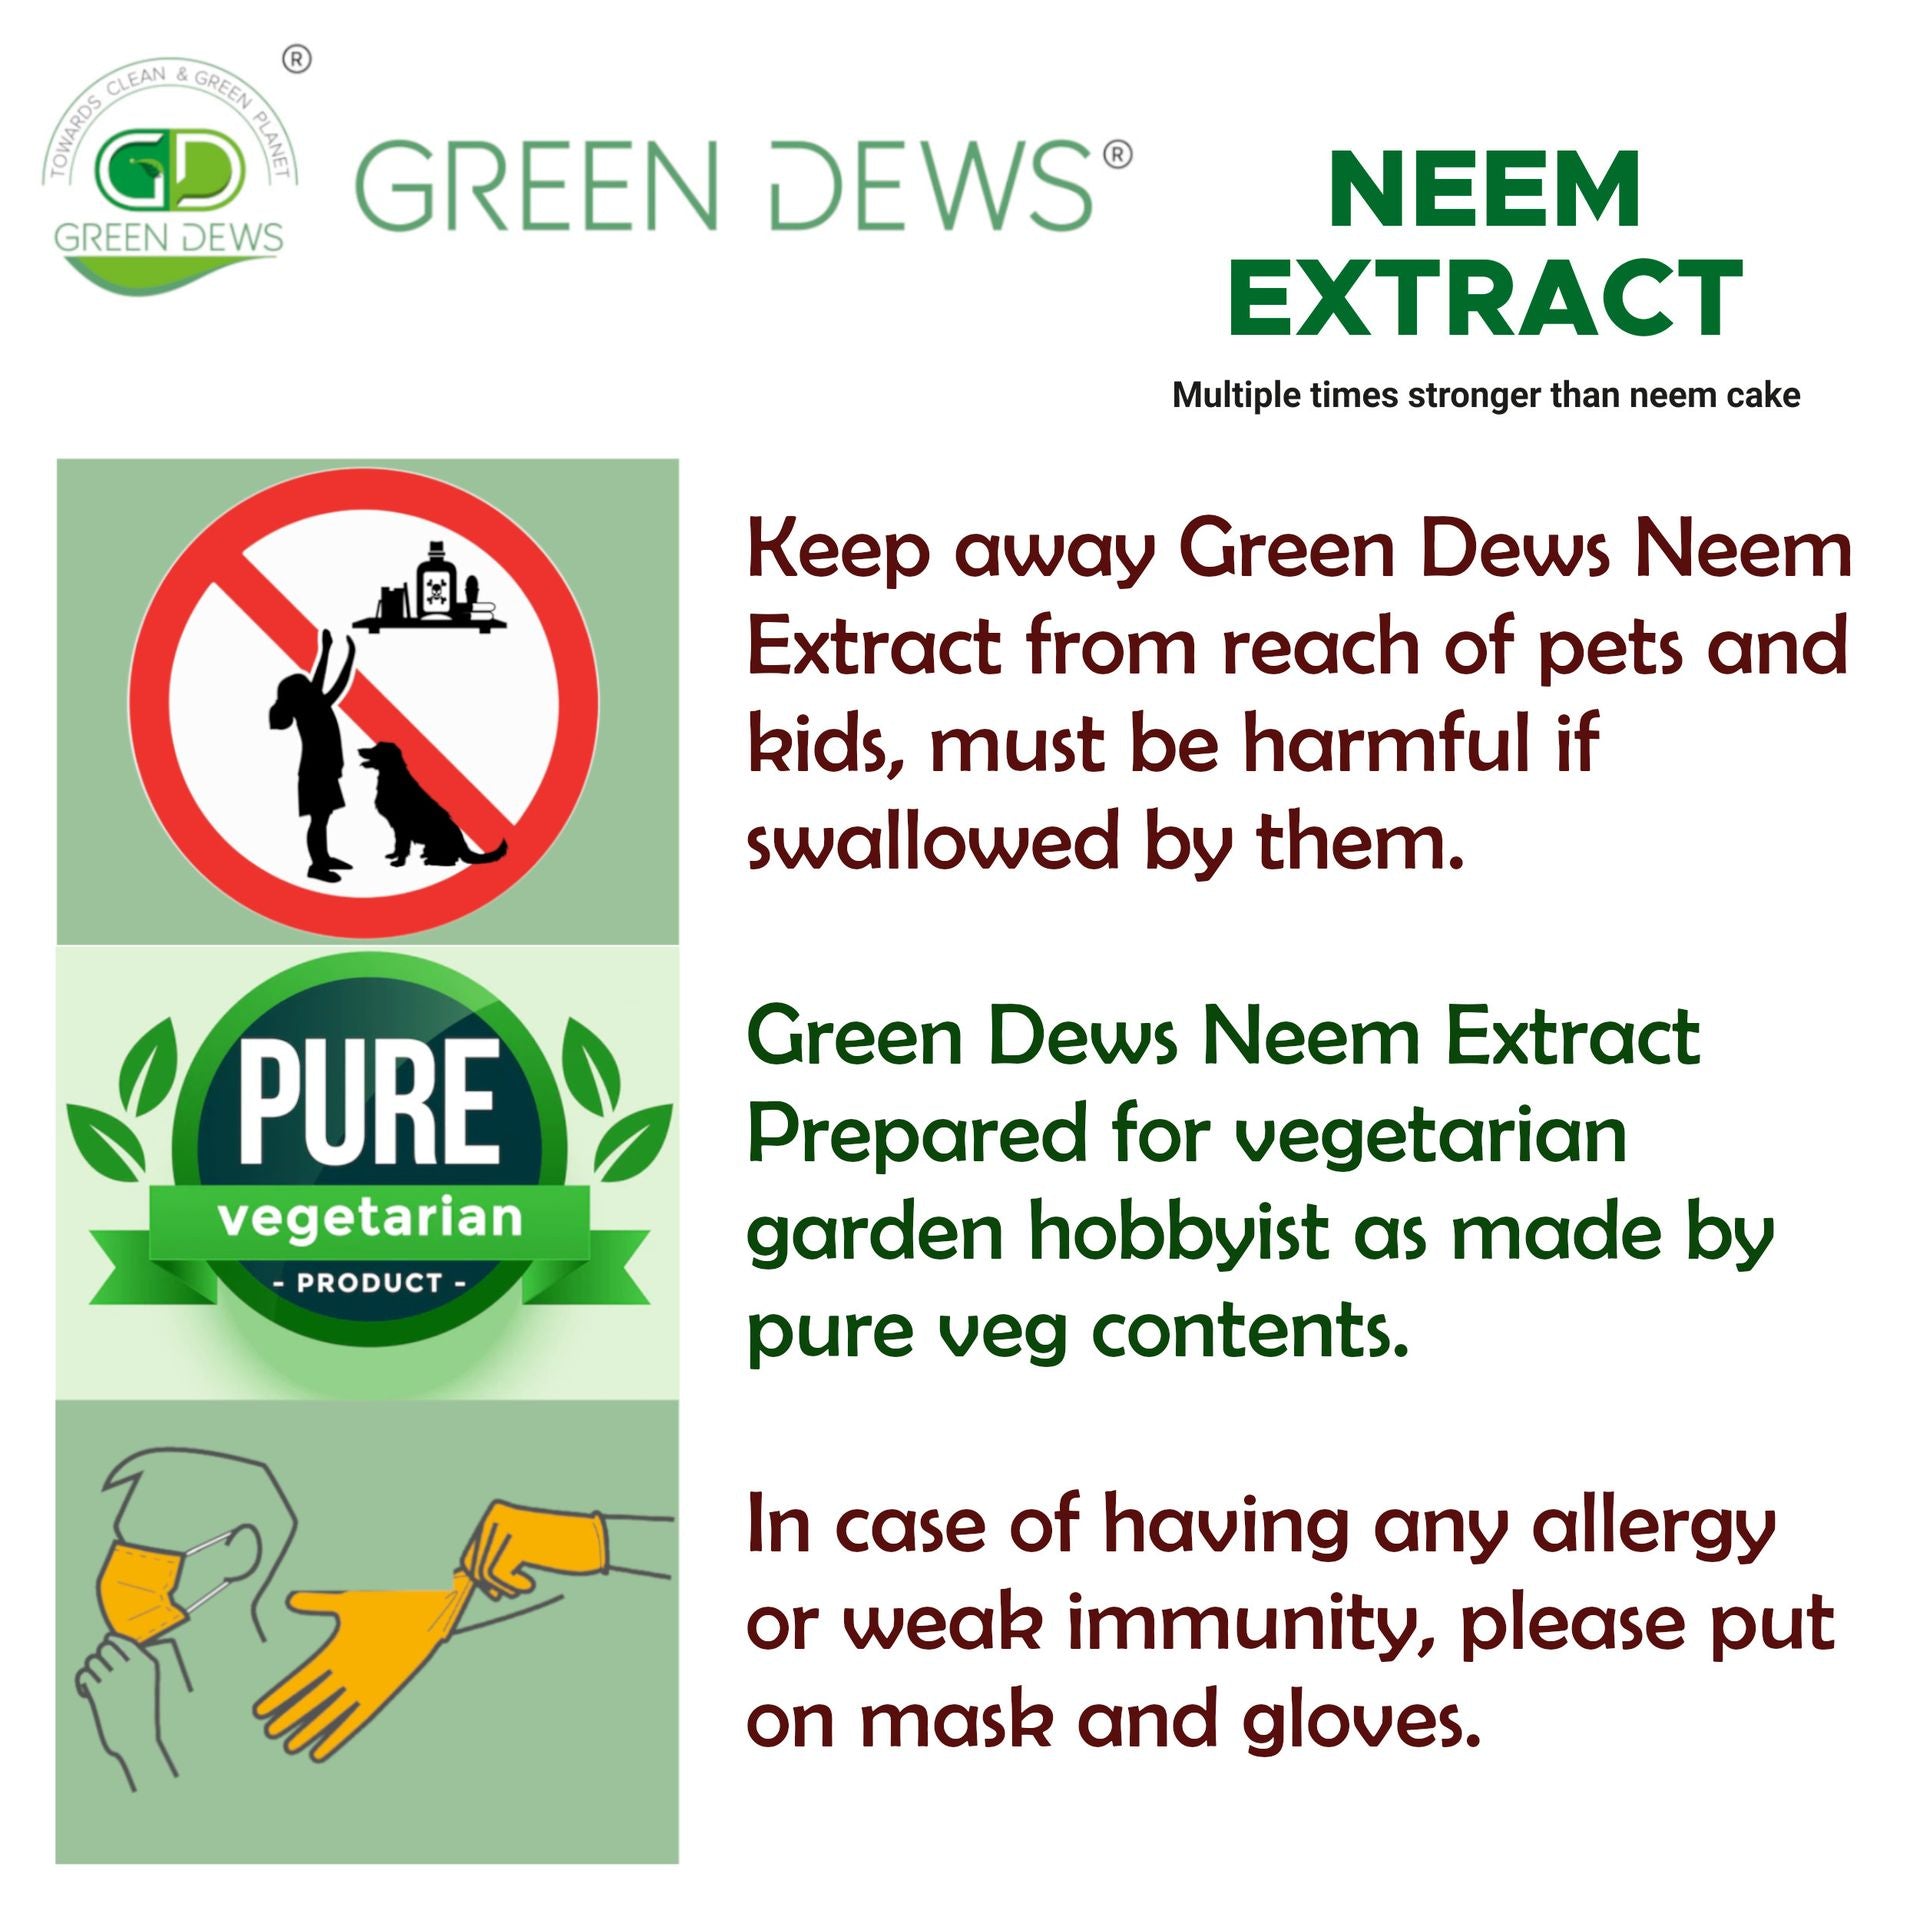 Green Dews Neem Extract Fertilizer Multi Times Stronger Than Neem Cake Organic Fertilizers for Plant Growth - hfnl!fe